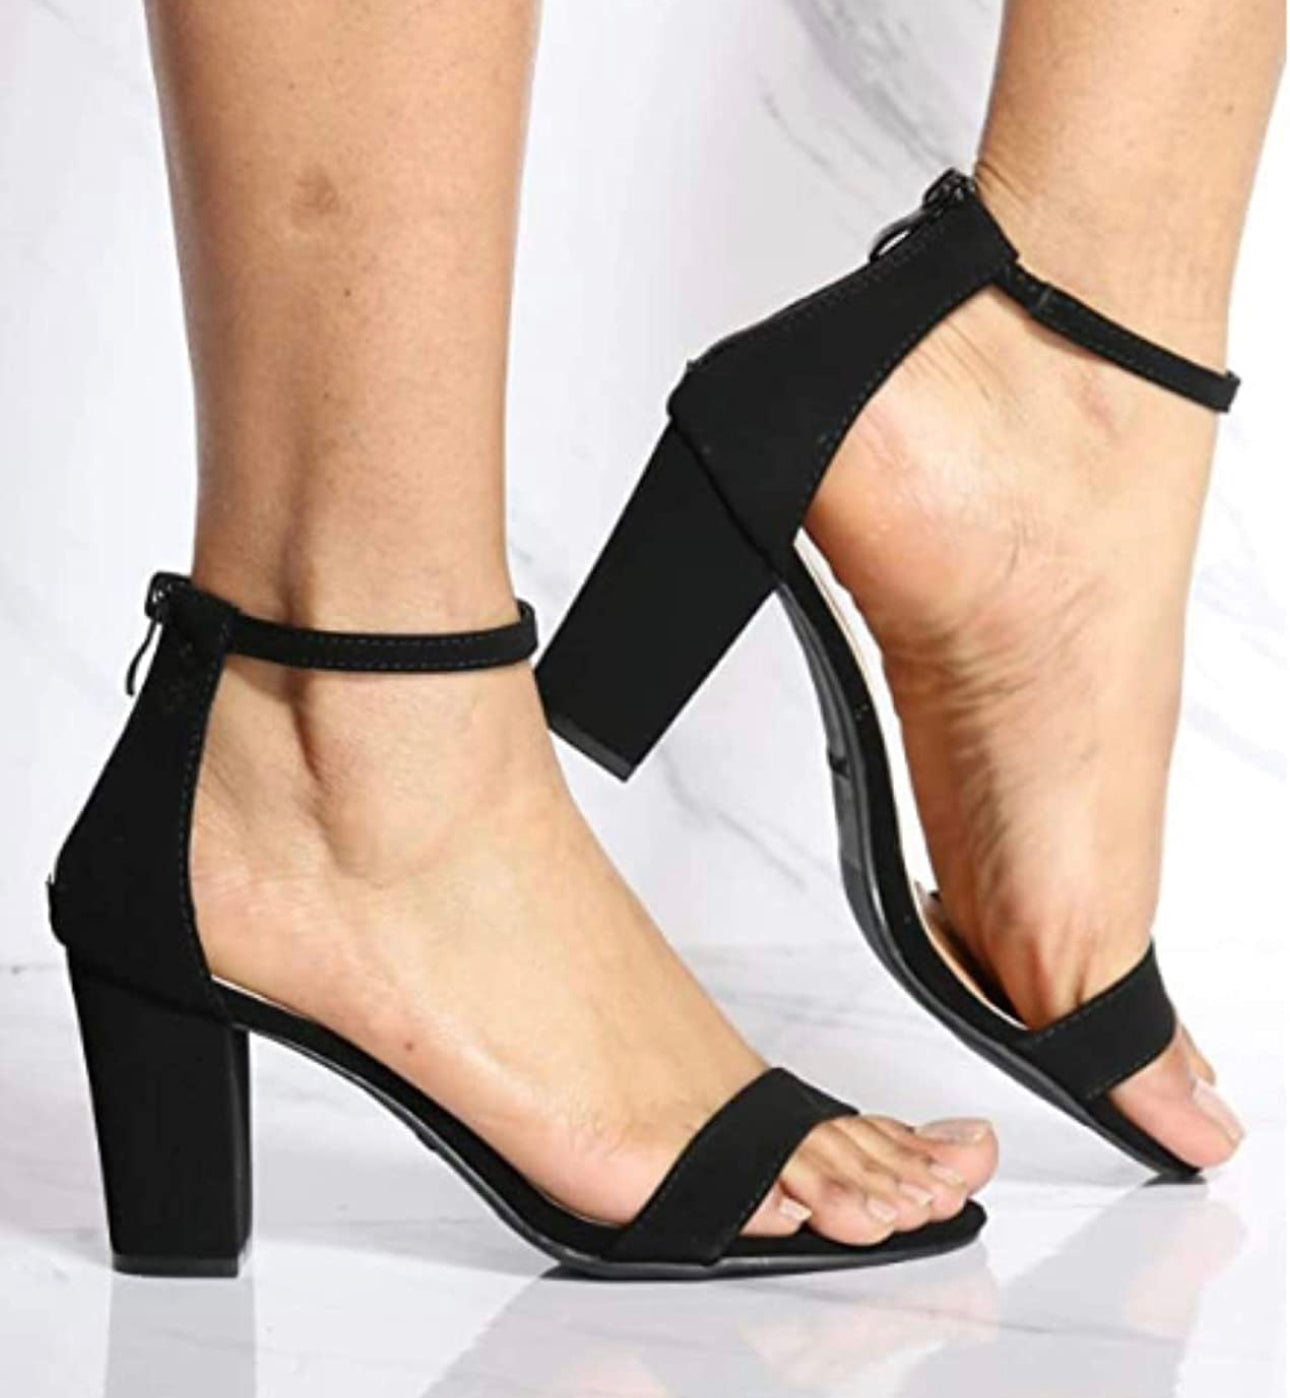 TOP Moda Hannah-1 Fashion Women's Ankle Strap High Heel Sandal Shoes size 8.5